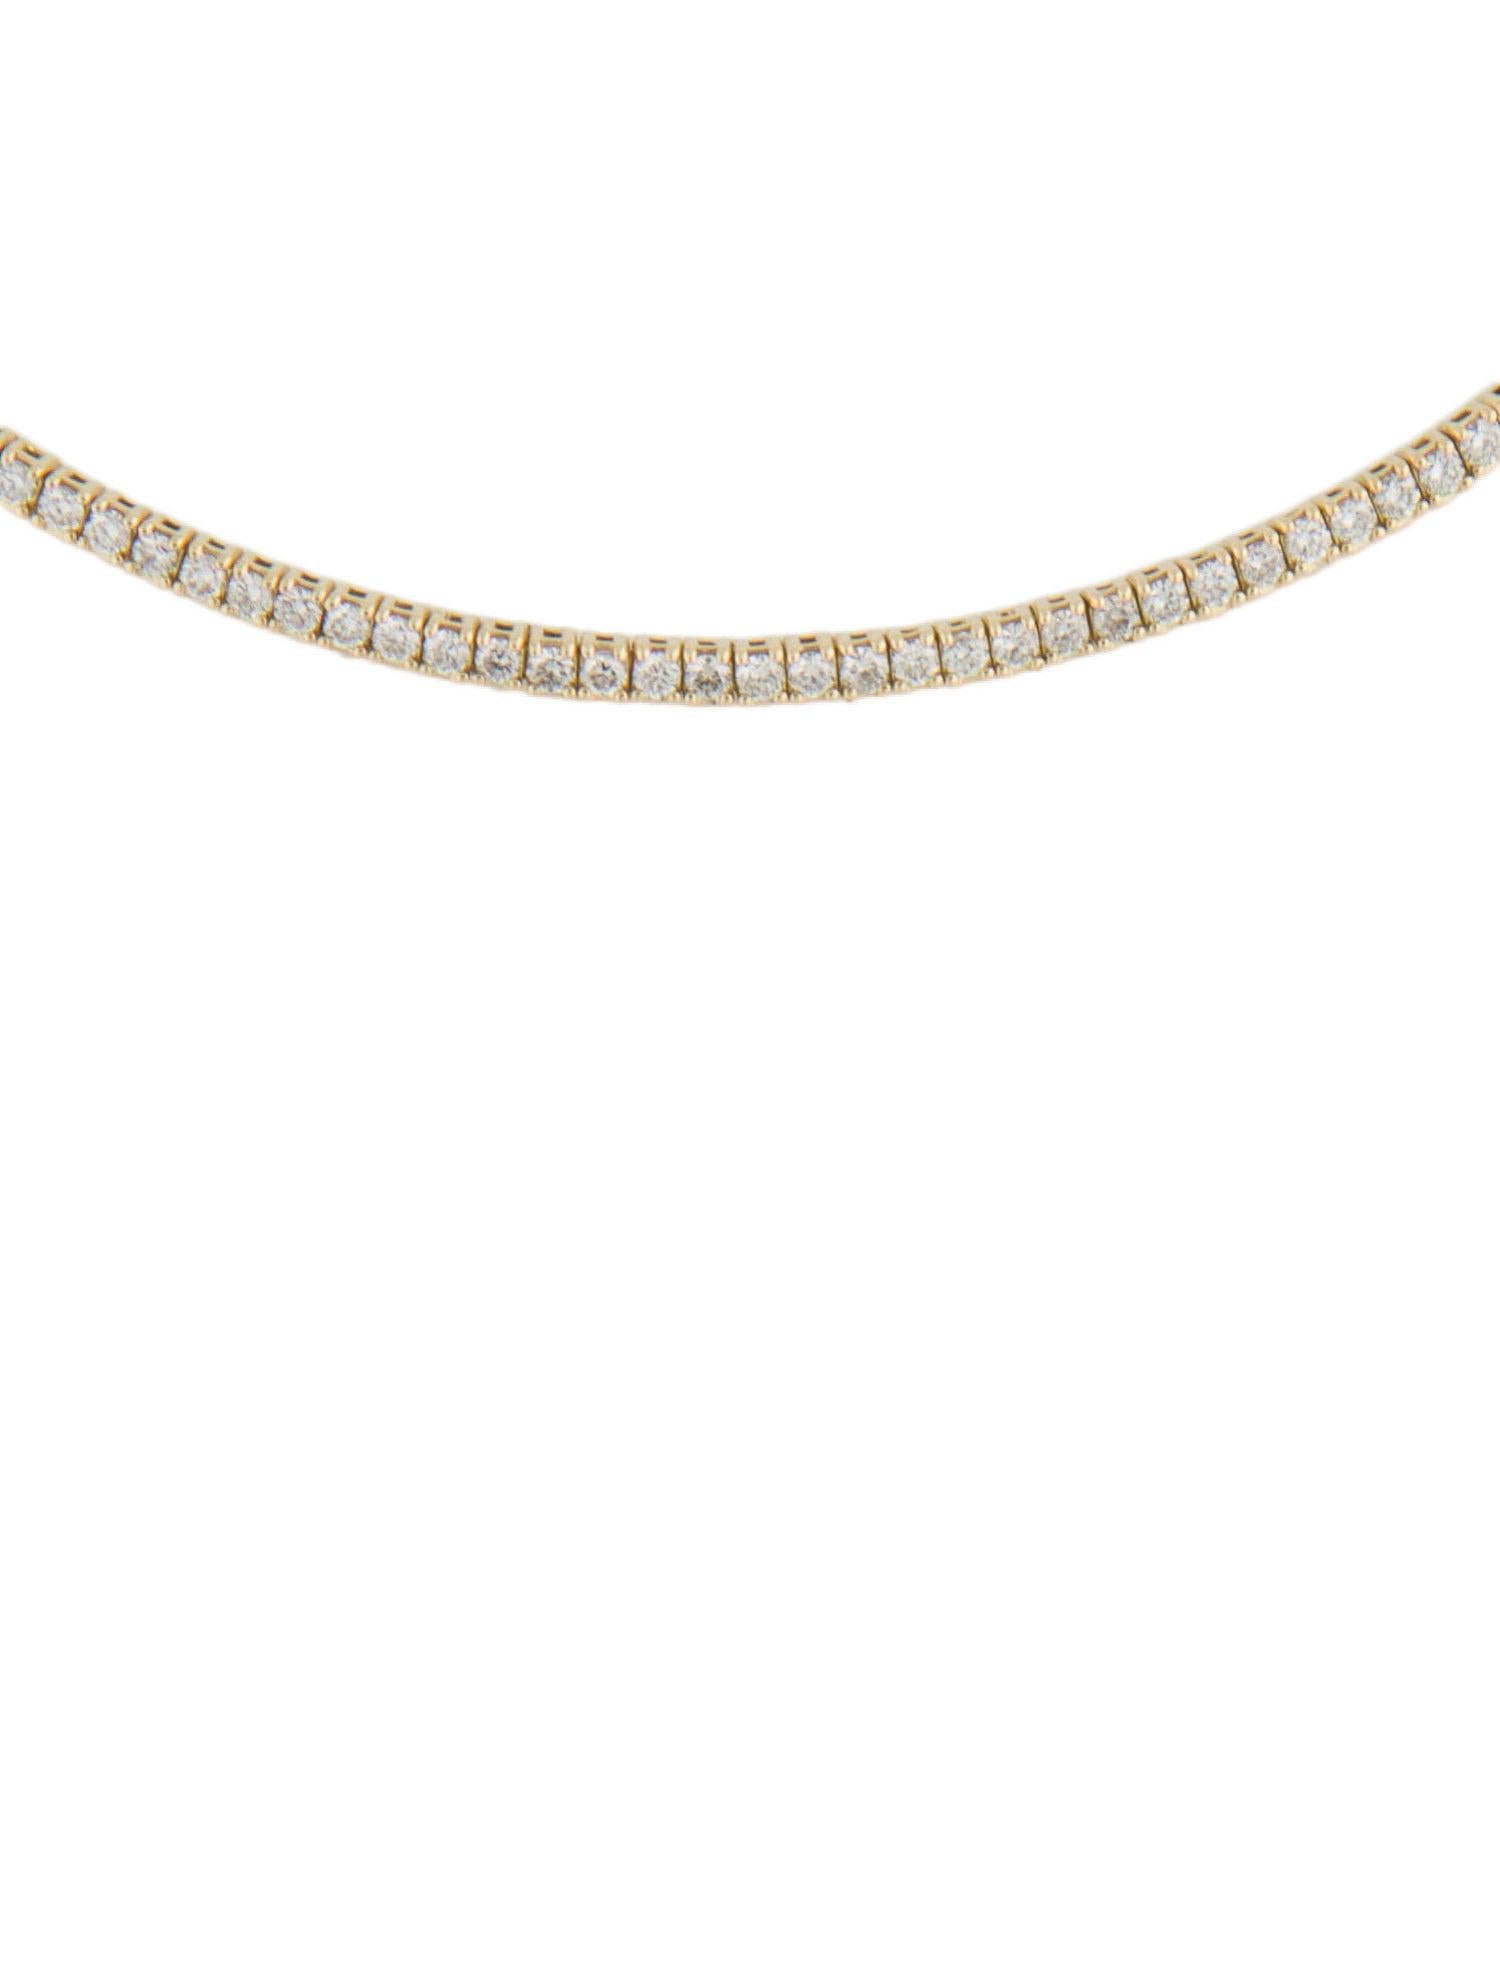 Contemporary 18 Karat Yellow Gold 3.56 Carat Flexible Diamond Choker Collar Necklace For Sale